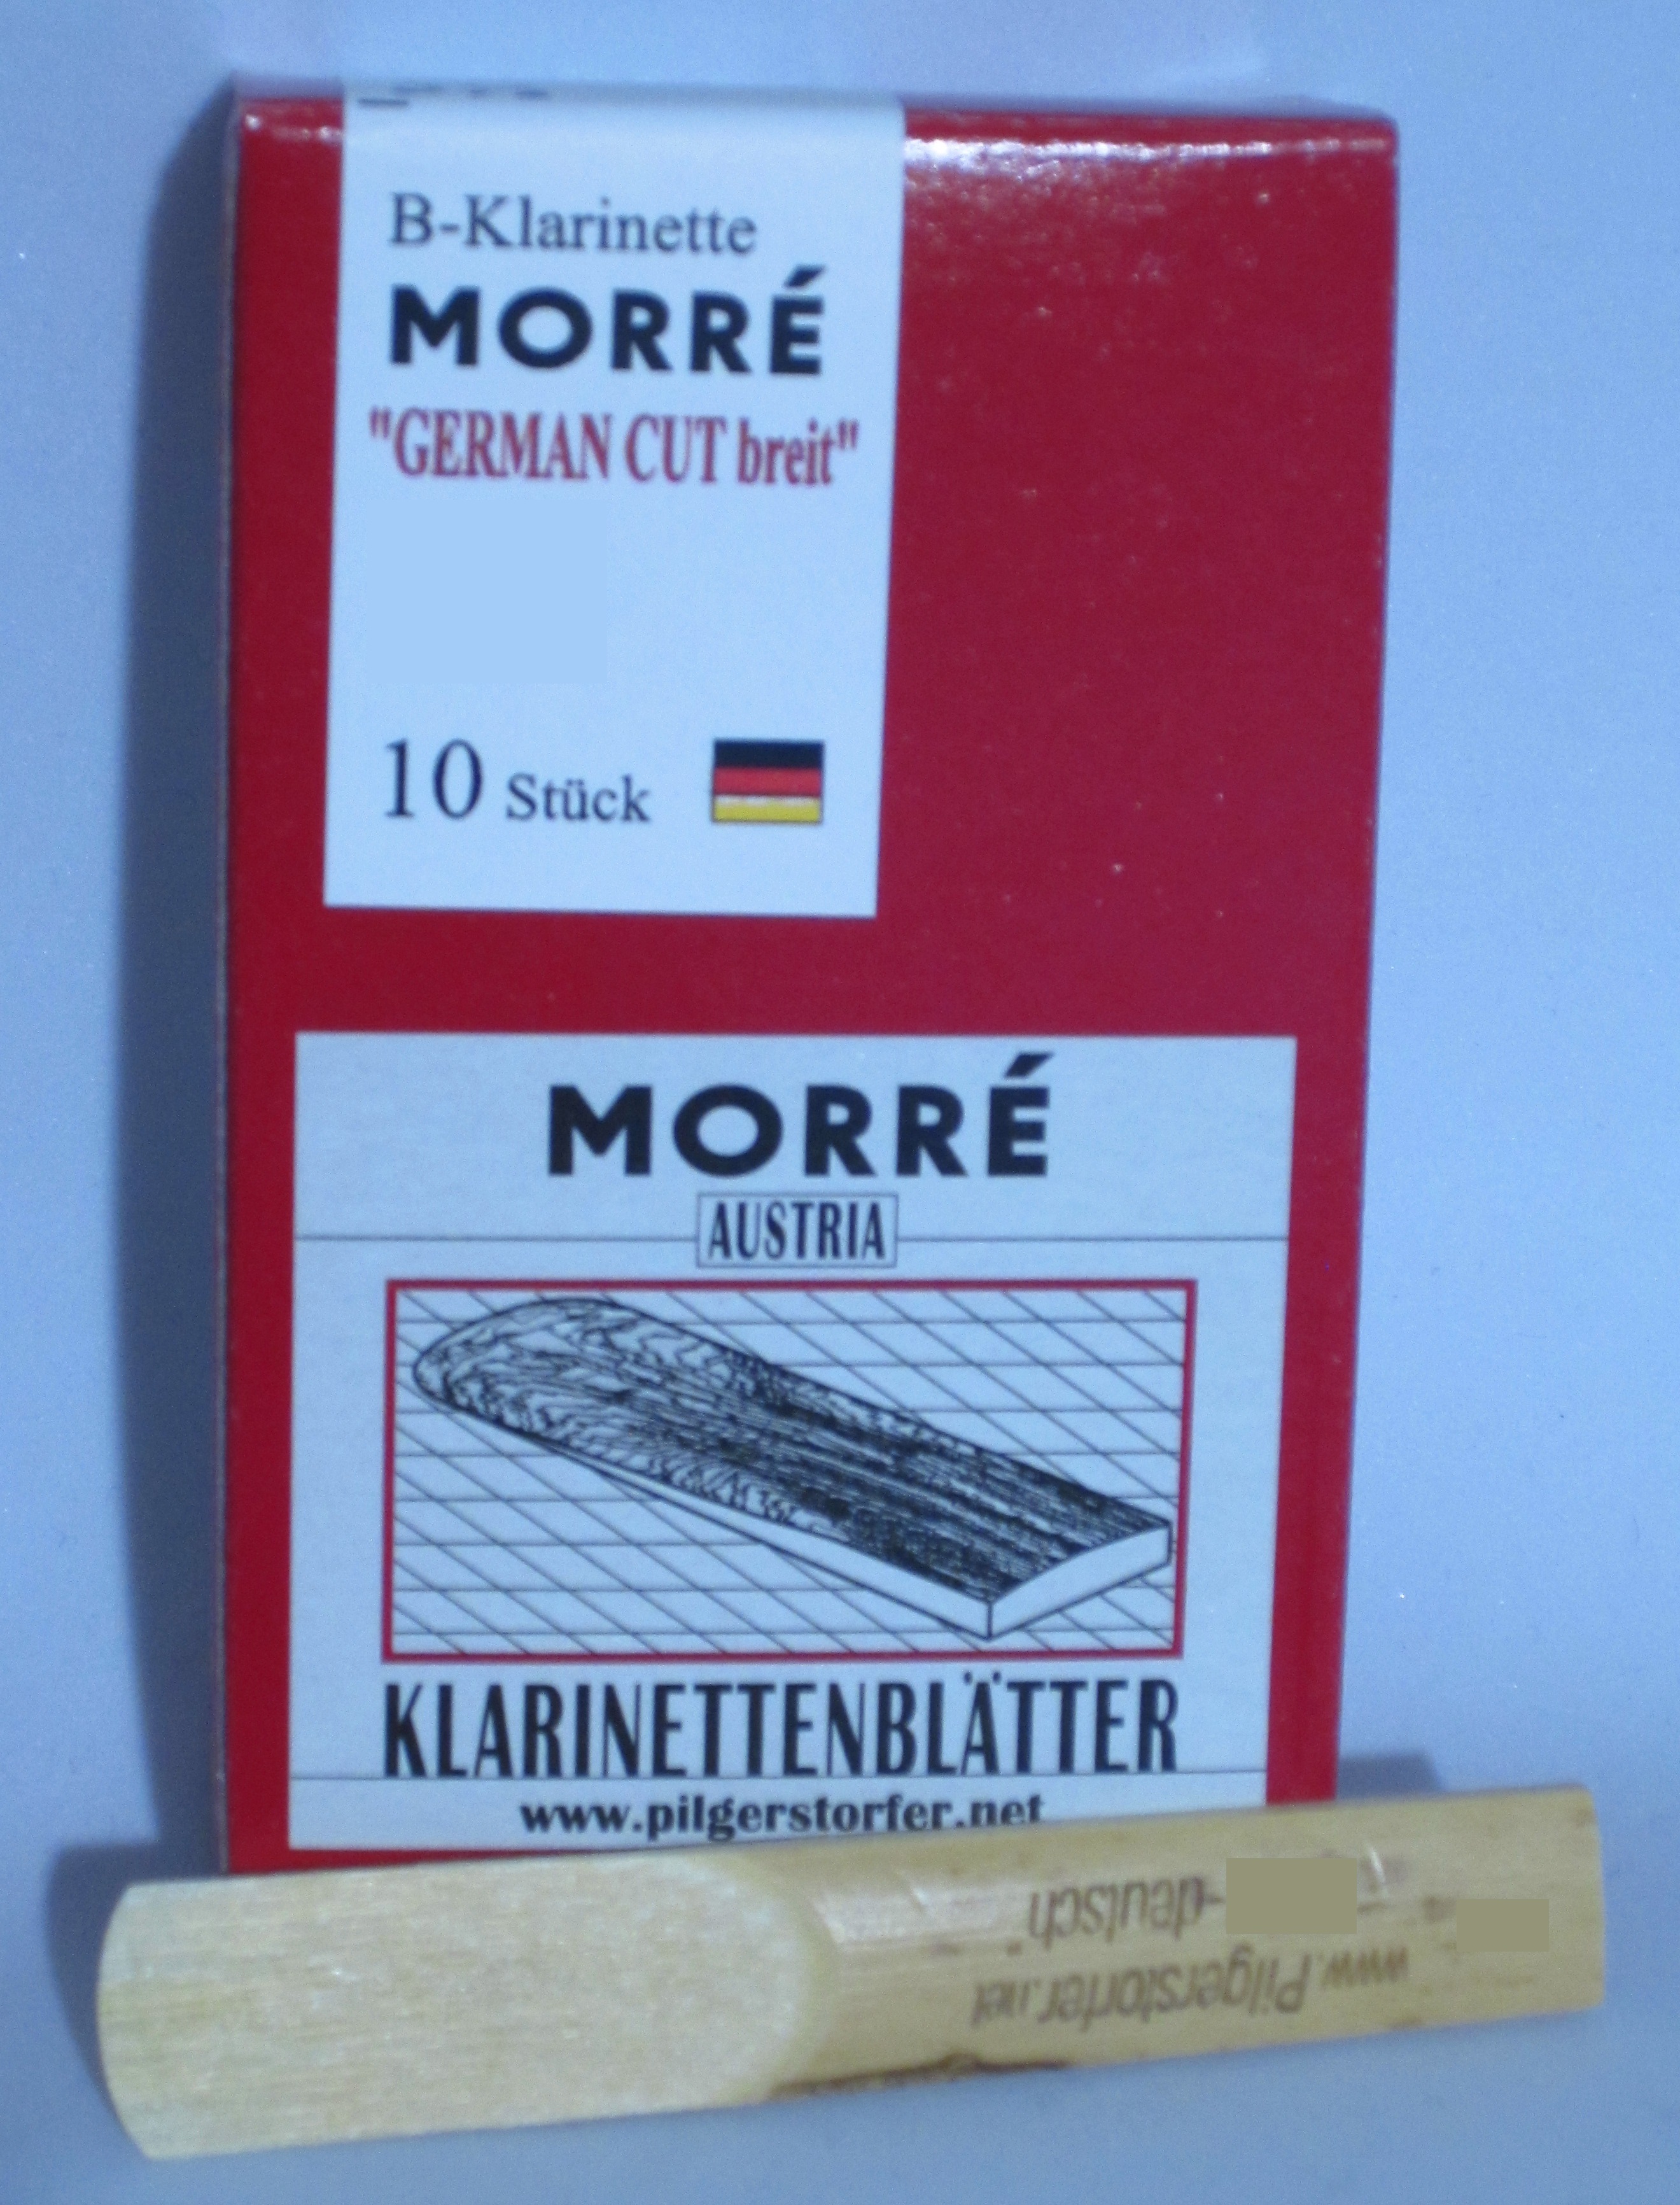 Klarinettenblätter Pilgerstorfer Morré German Cut breit Stärke: 3